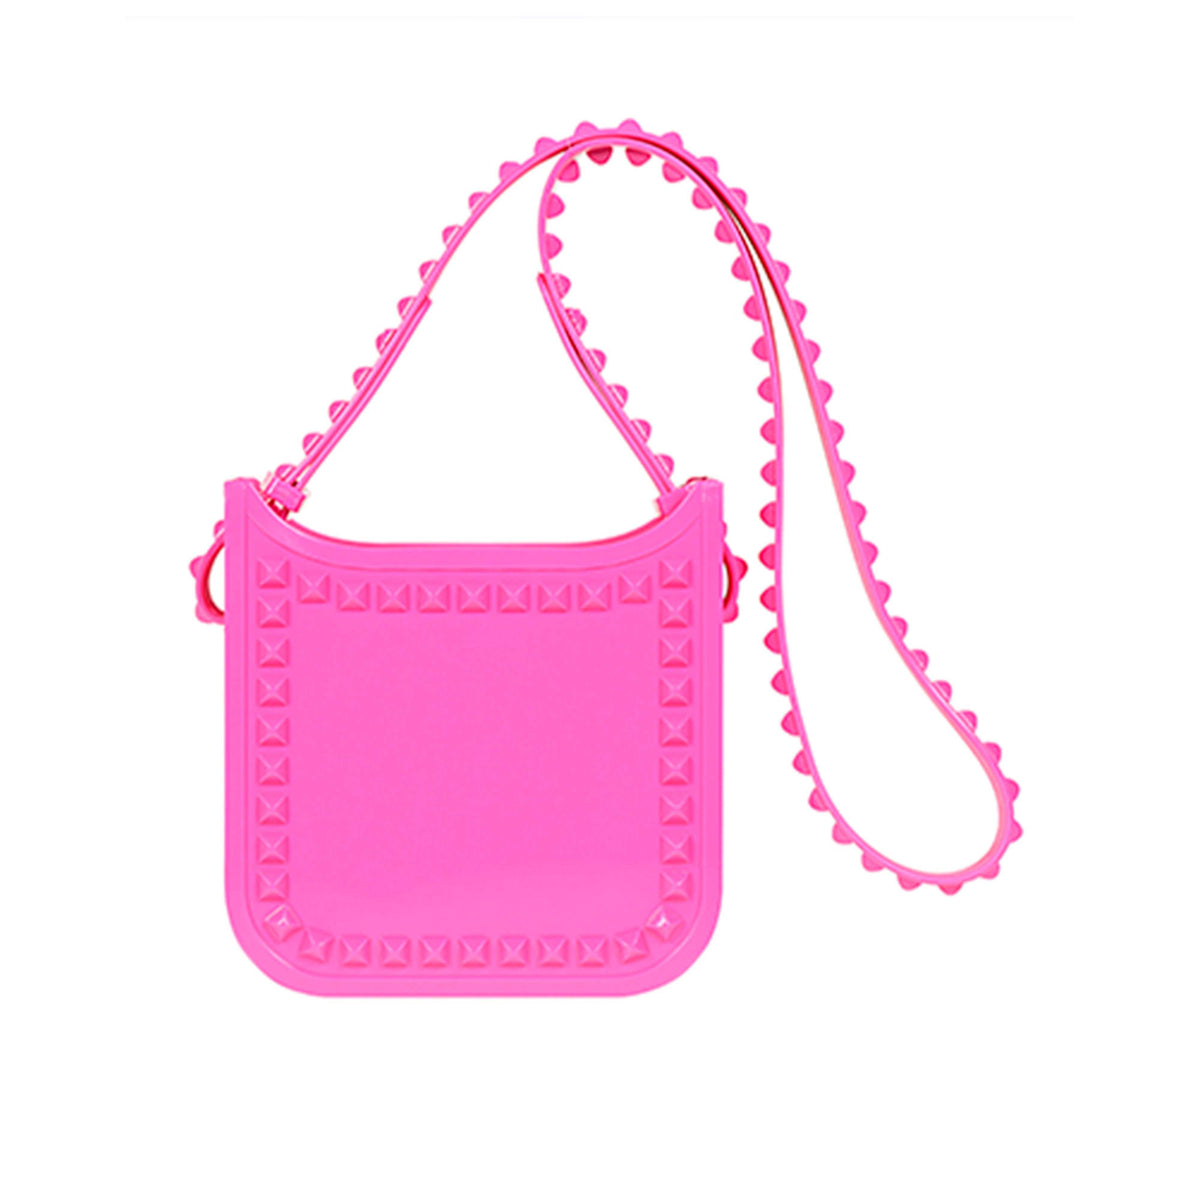 Fuchsia Carmen Sol jelly crossbody purse